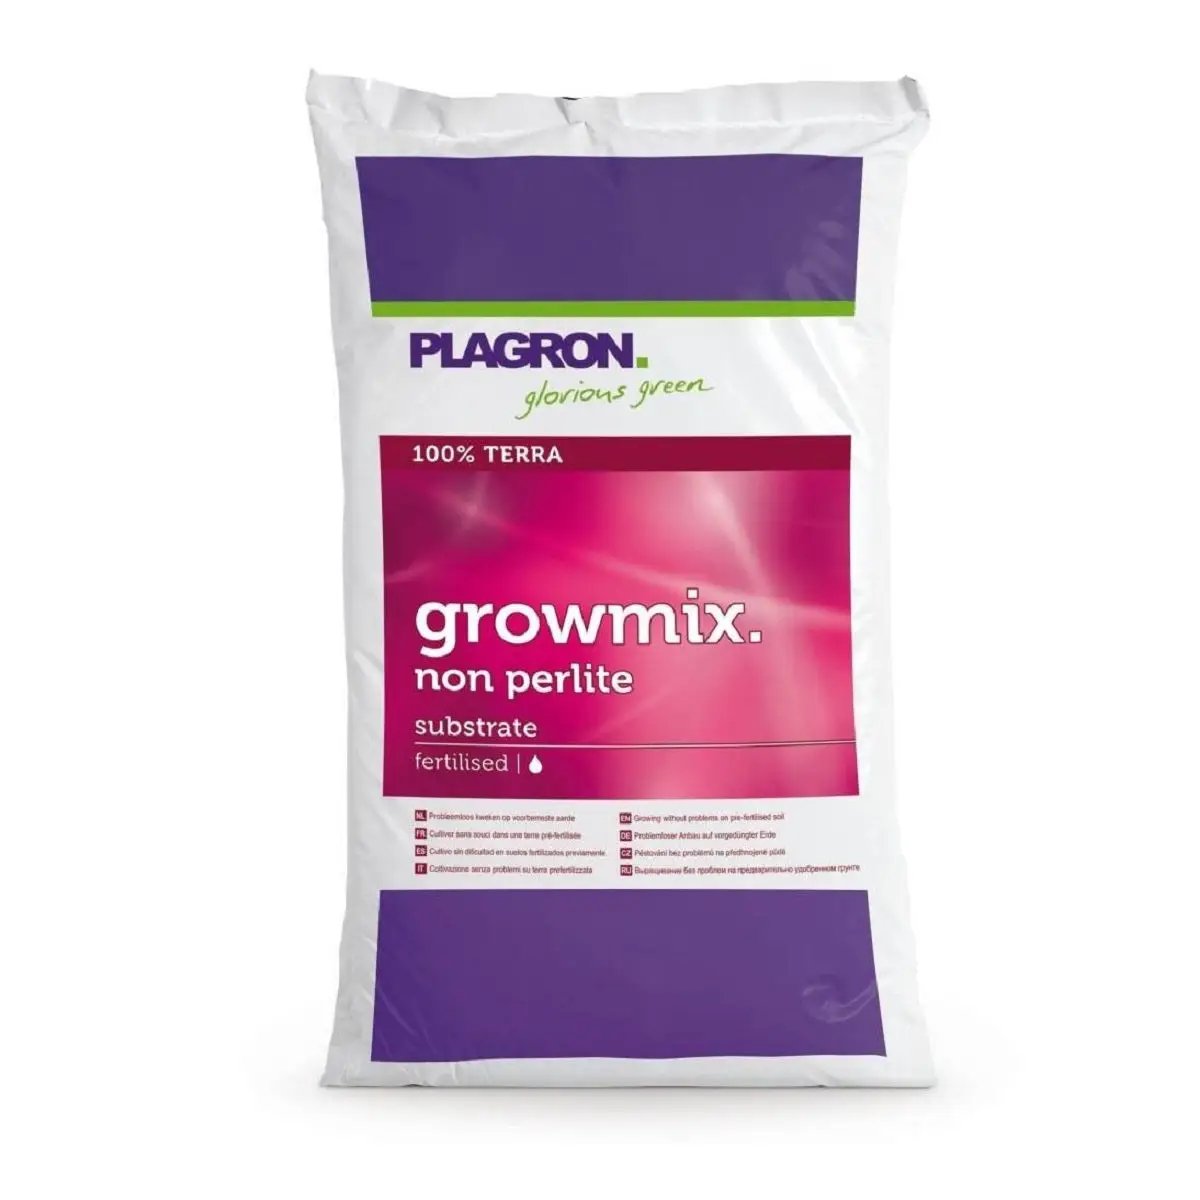 Plagron Growmix 50 Litres